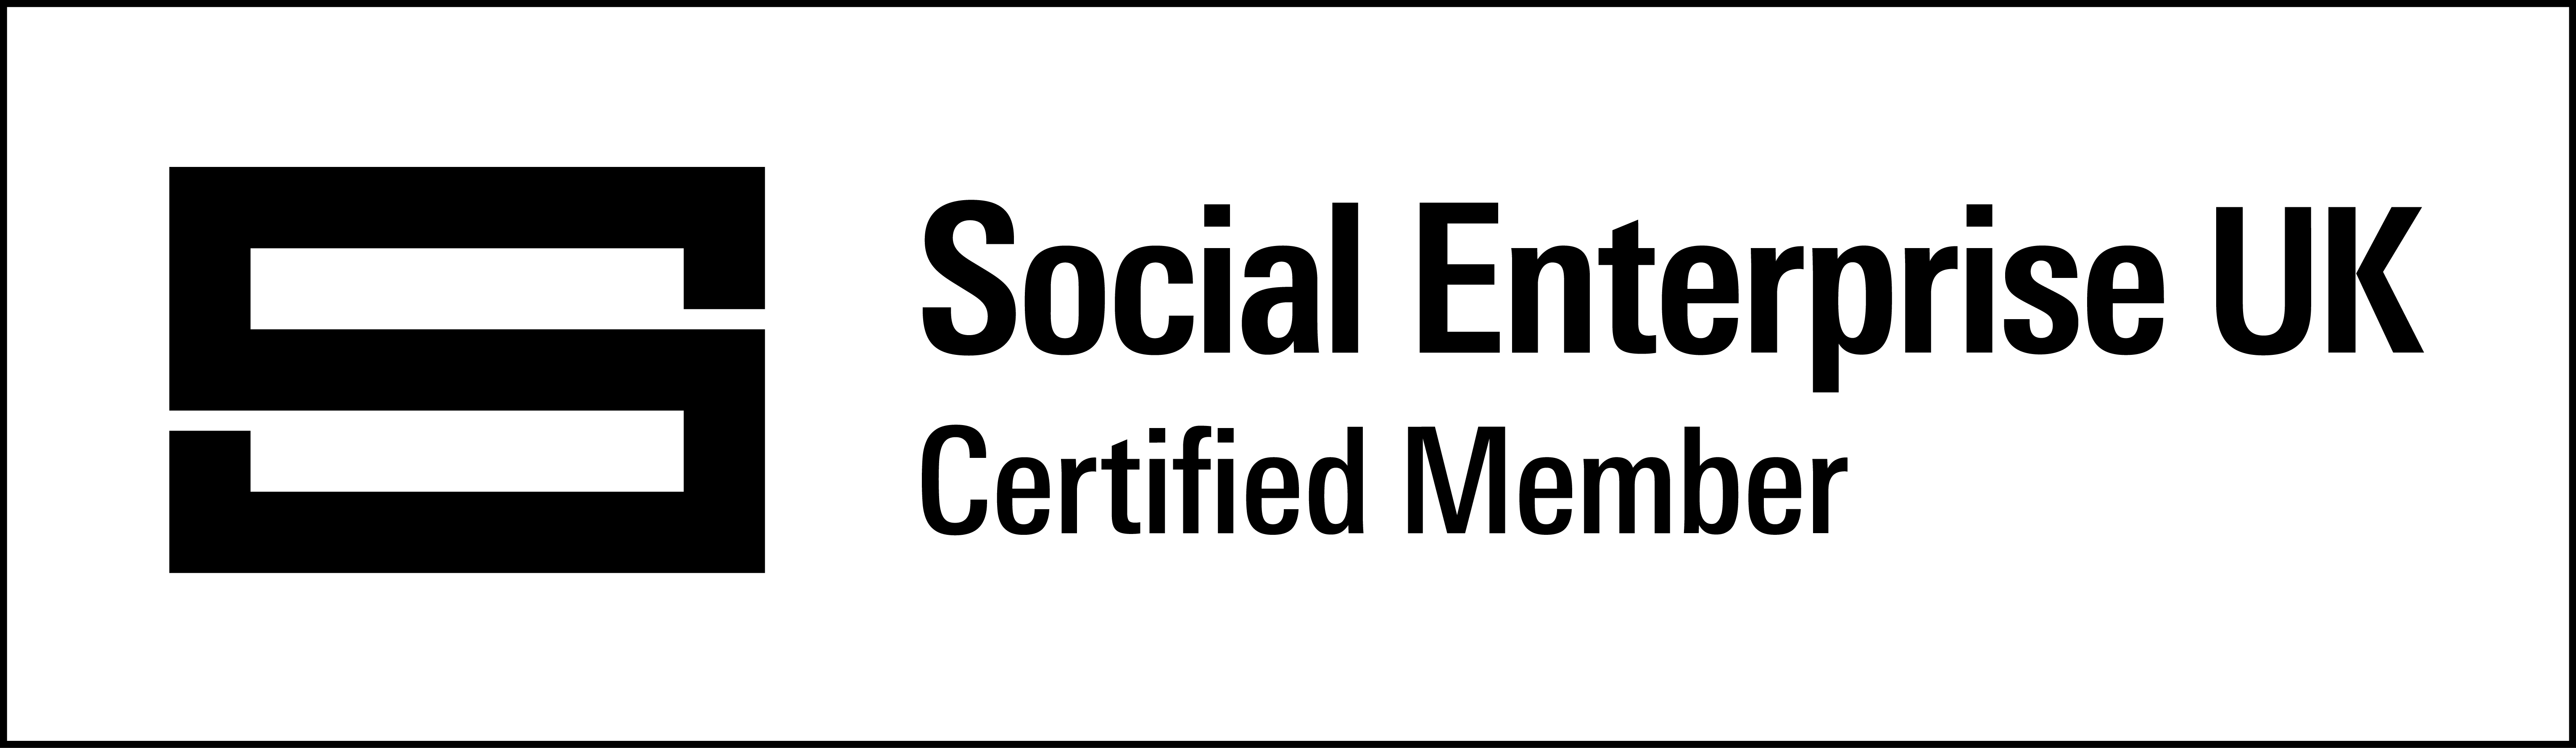 Certified Social Enterprise Badge - Black